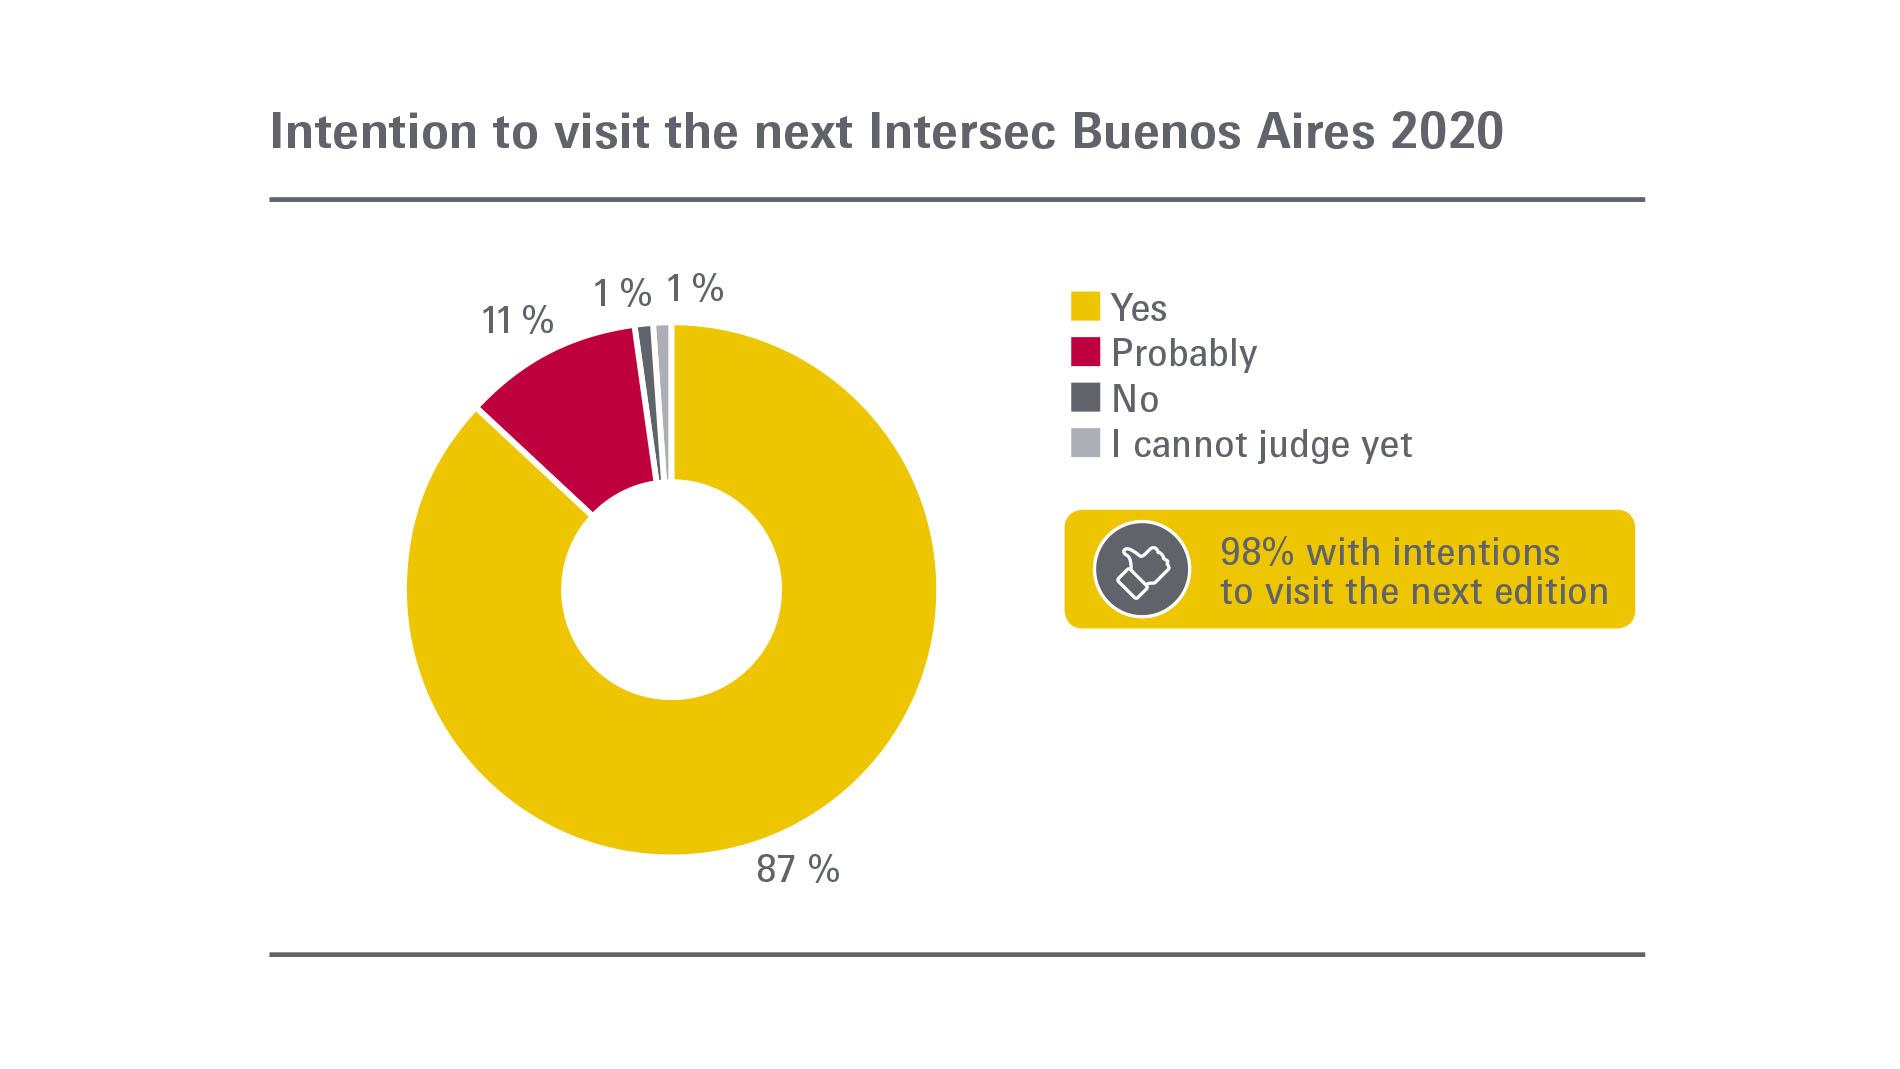 Intersec Buenos Aires: Visitors - Participation in the next exhibition